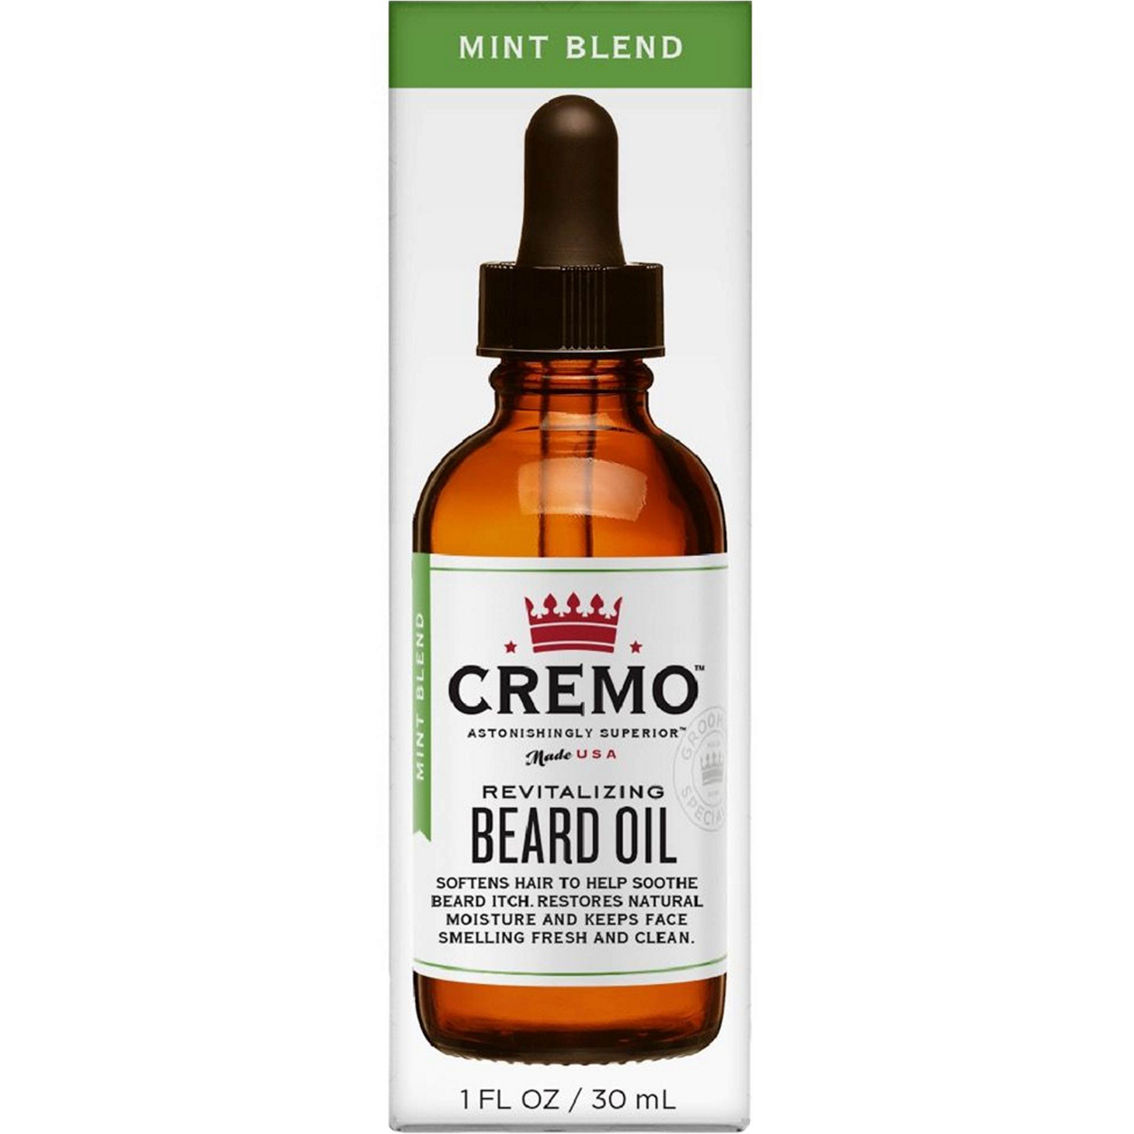 Cremo Beard Oil Tea Tree Mint 1 oz. - Image 2 of 3